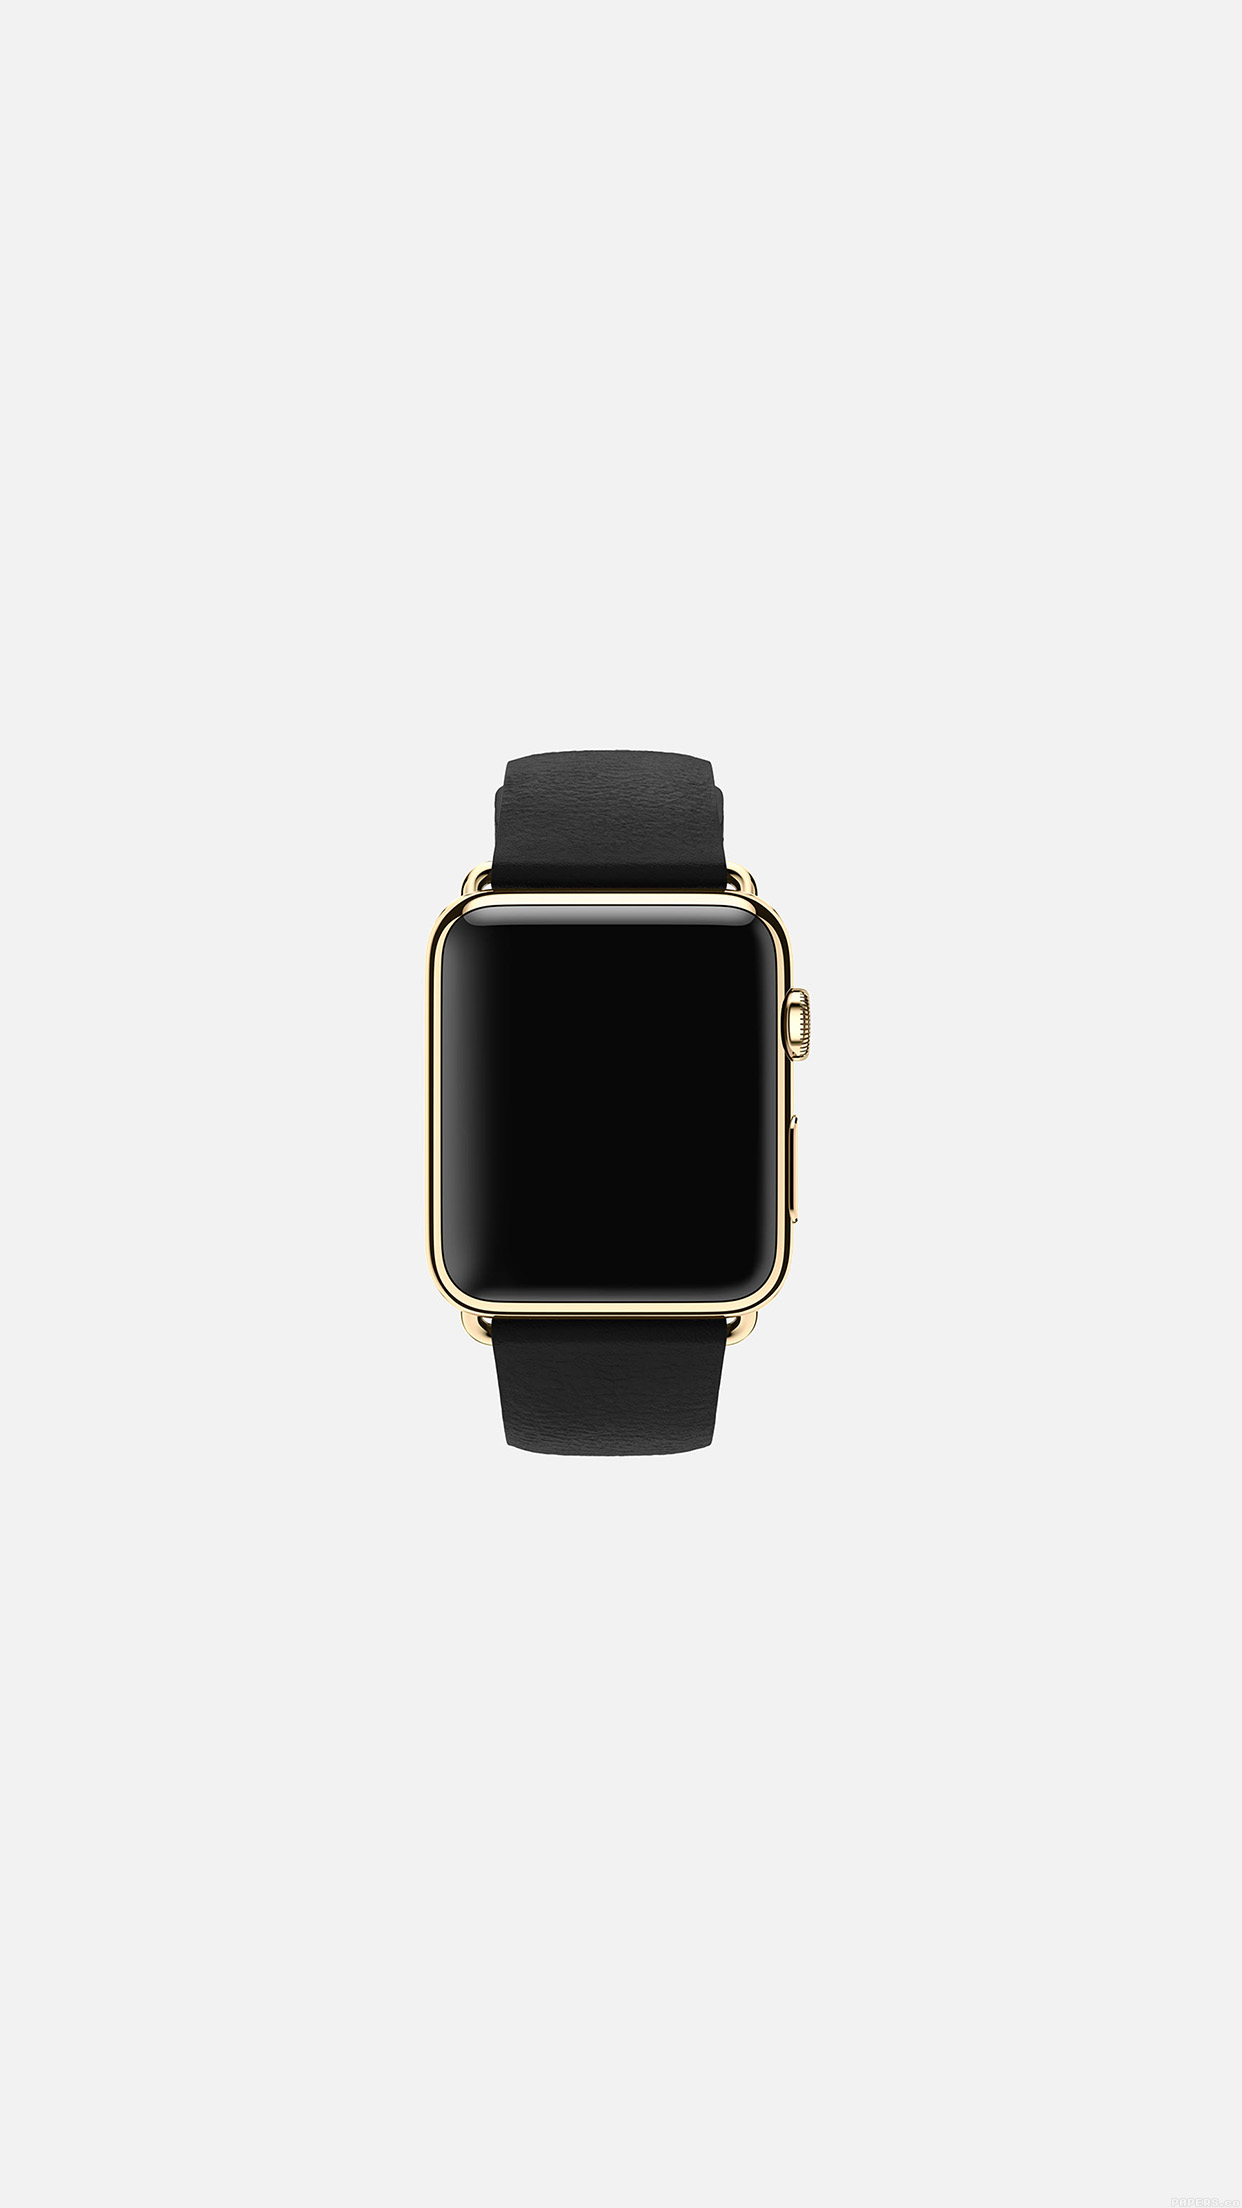 Dark Black Apple Watch Simple Art Android Wallpaper - Apple Watch - HD Wallpaper 